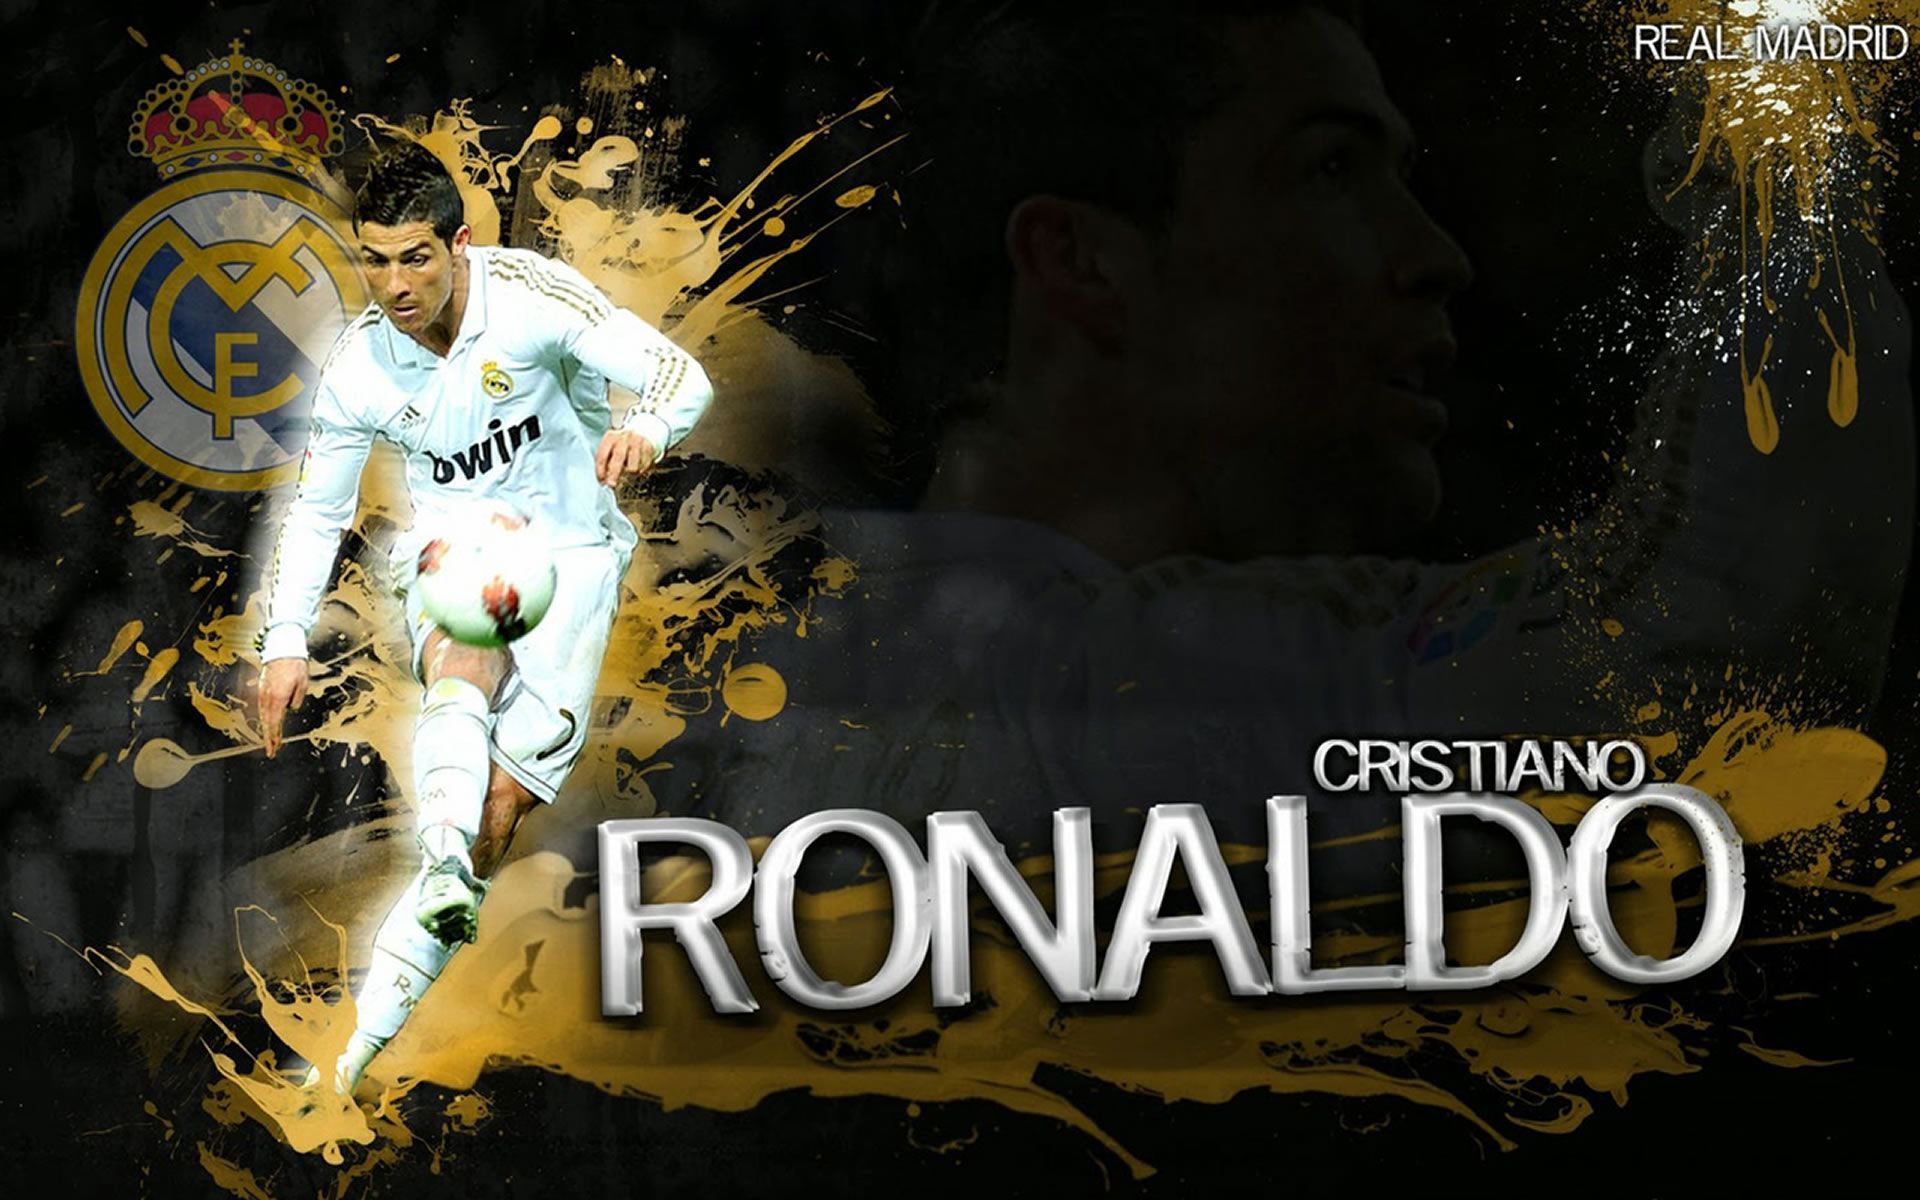 Cristiano Ronaldo Wallpaper Real Madrid 2015 - Cristiano Ronaldo ...